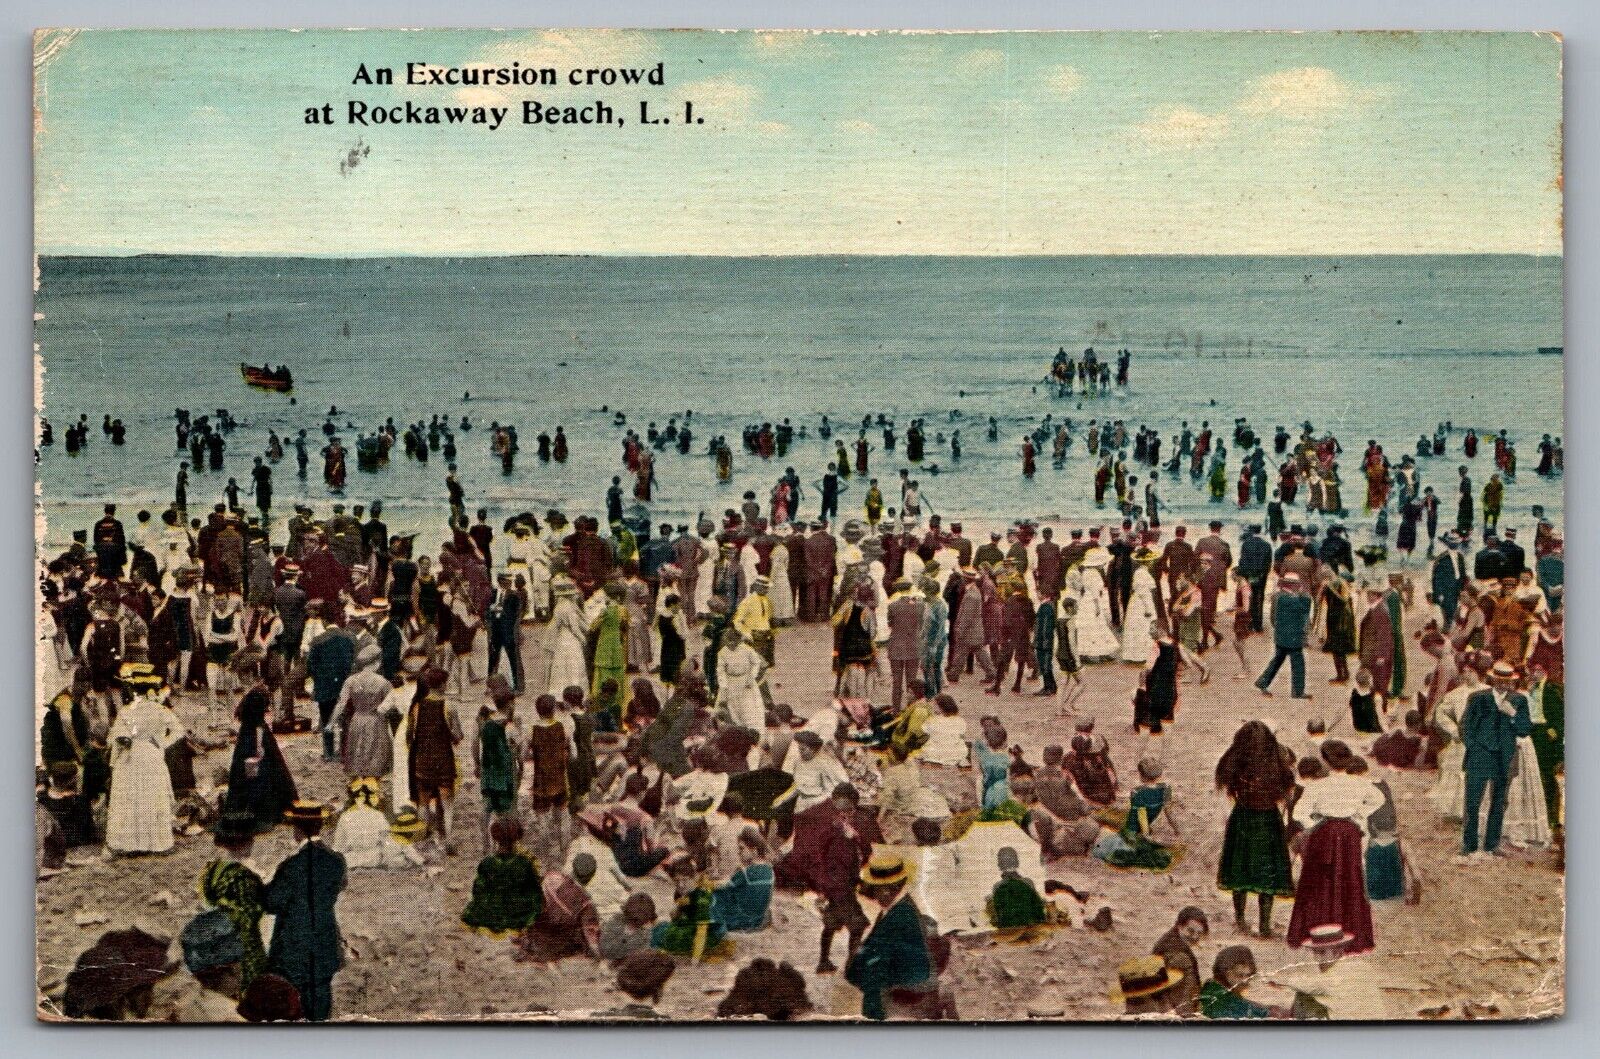 An Excursion Crowd at Rockaway Beach L. I. New York — Antique Postcard c. 1914